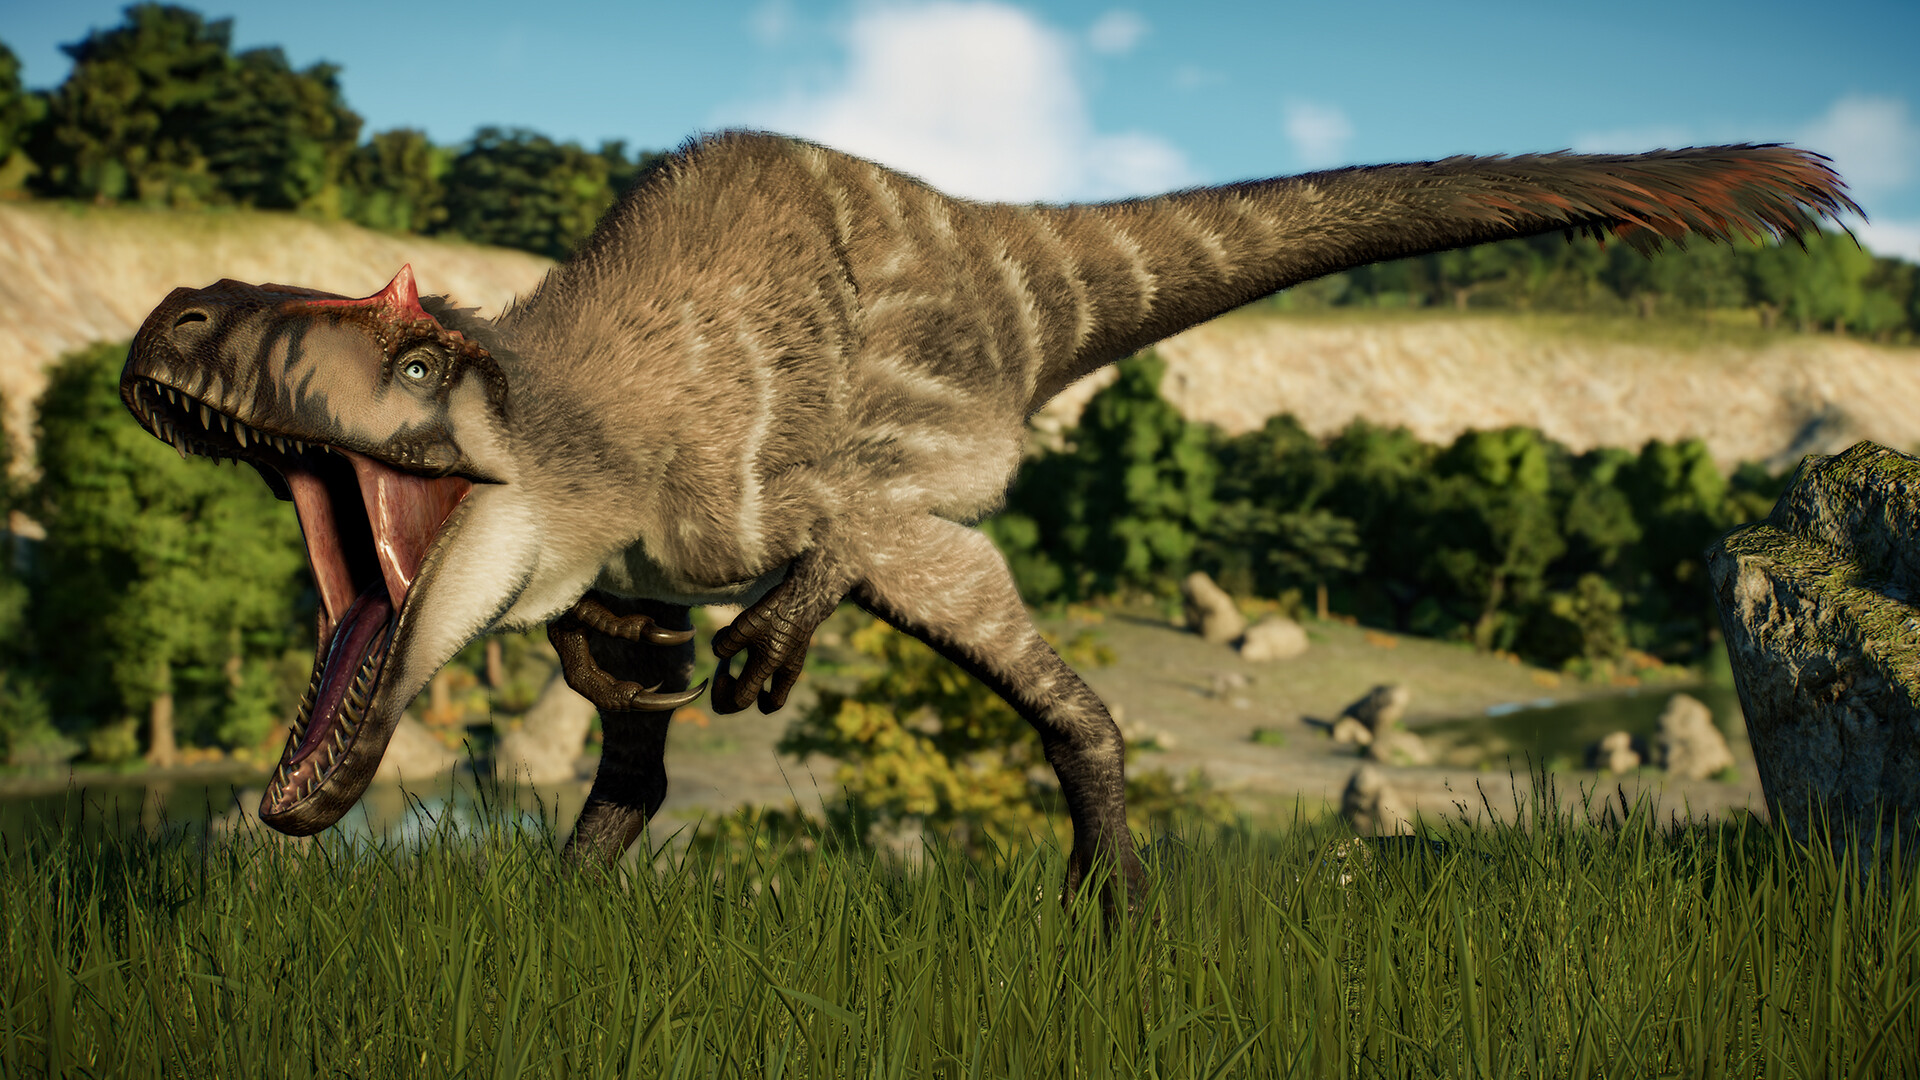 [$ 3.93] Jurassic World Evolution 2 - Feathered Species Pack DLC Steam CD Key